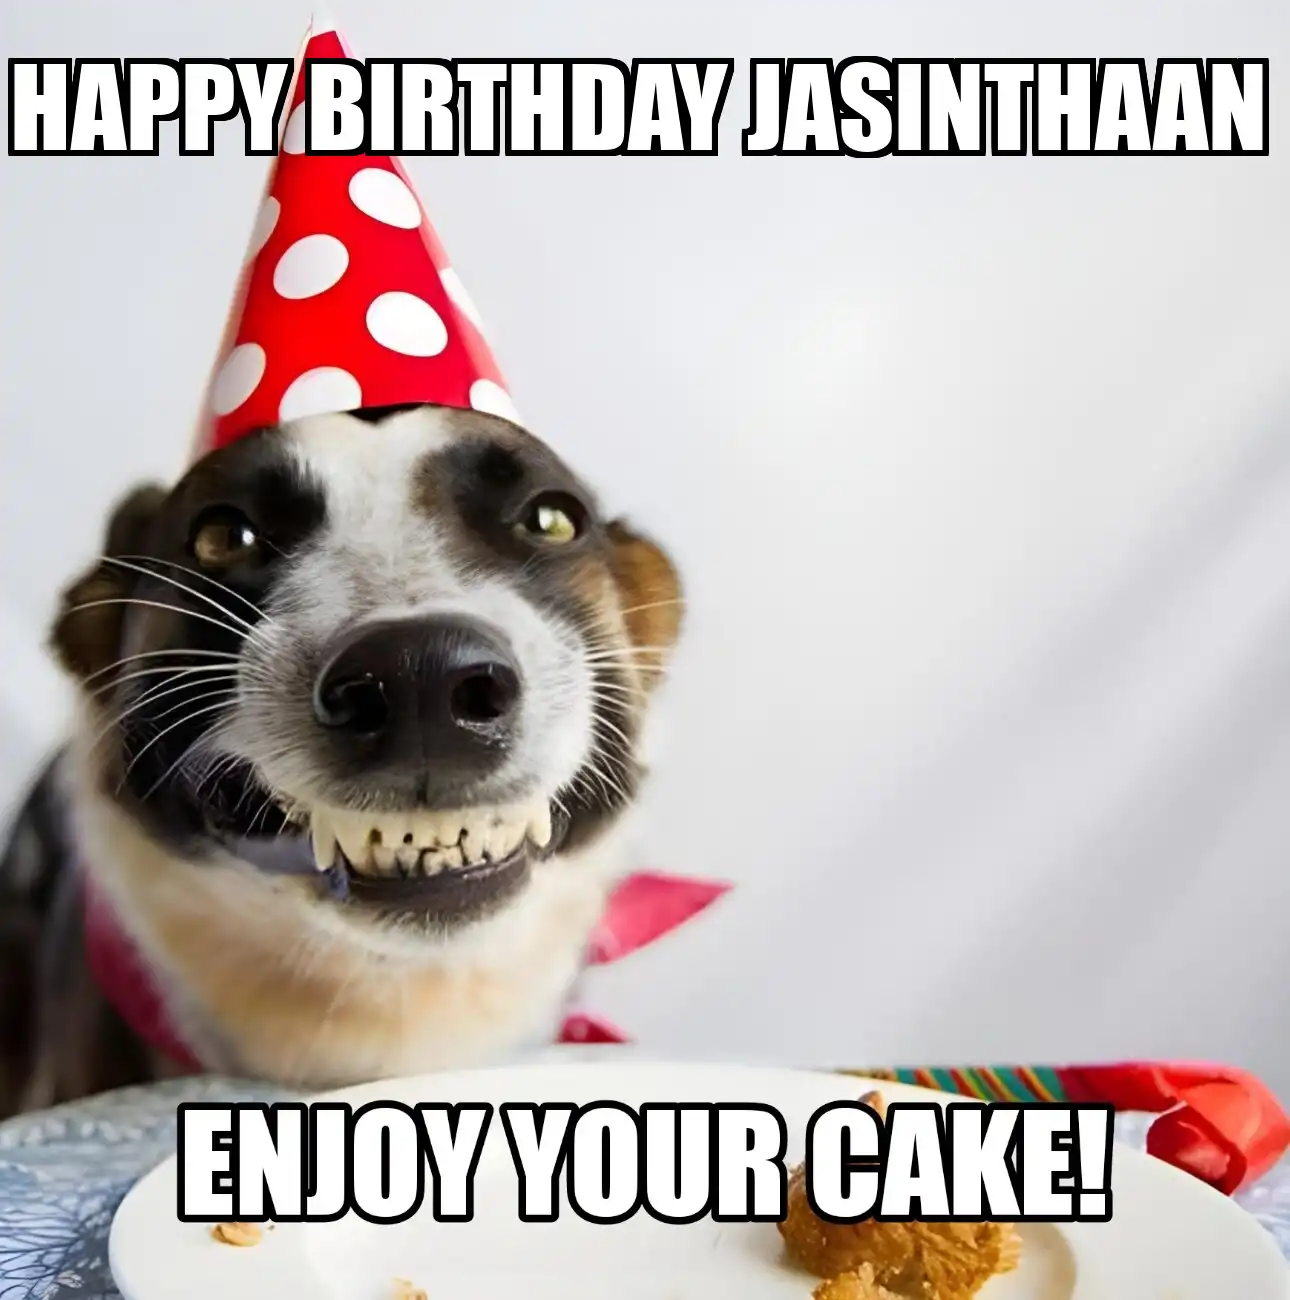 Happy Birthday Jasinthaan Enjoy Your Cake Dog Meme